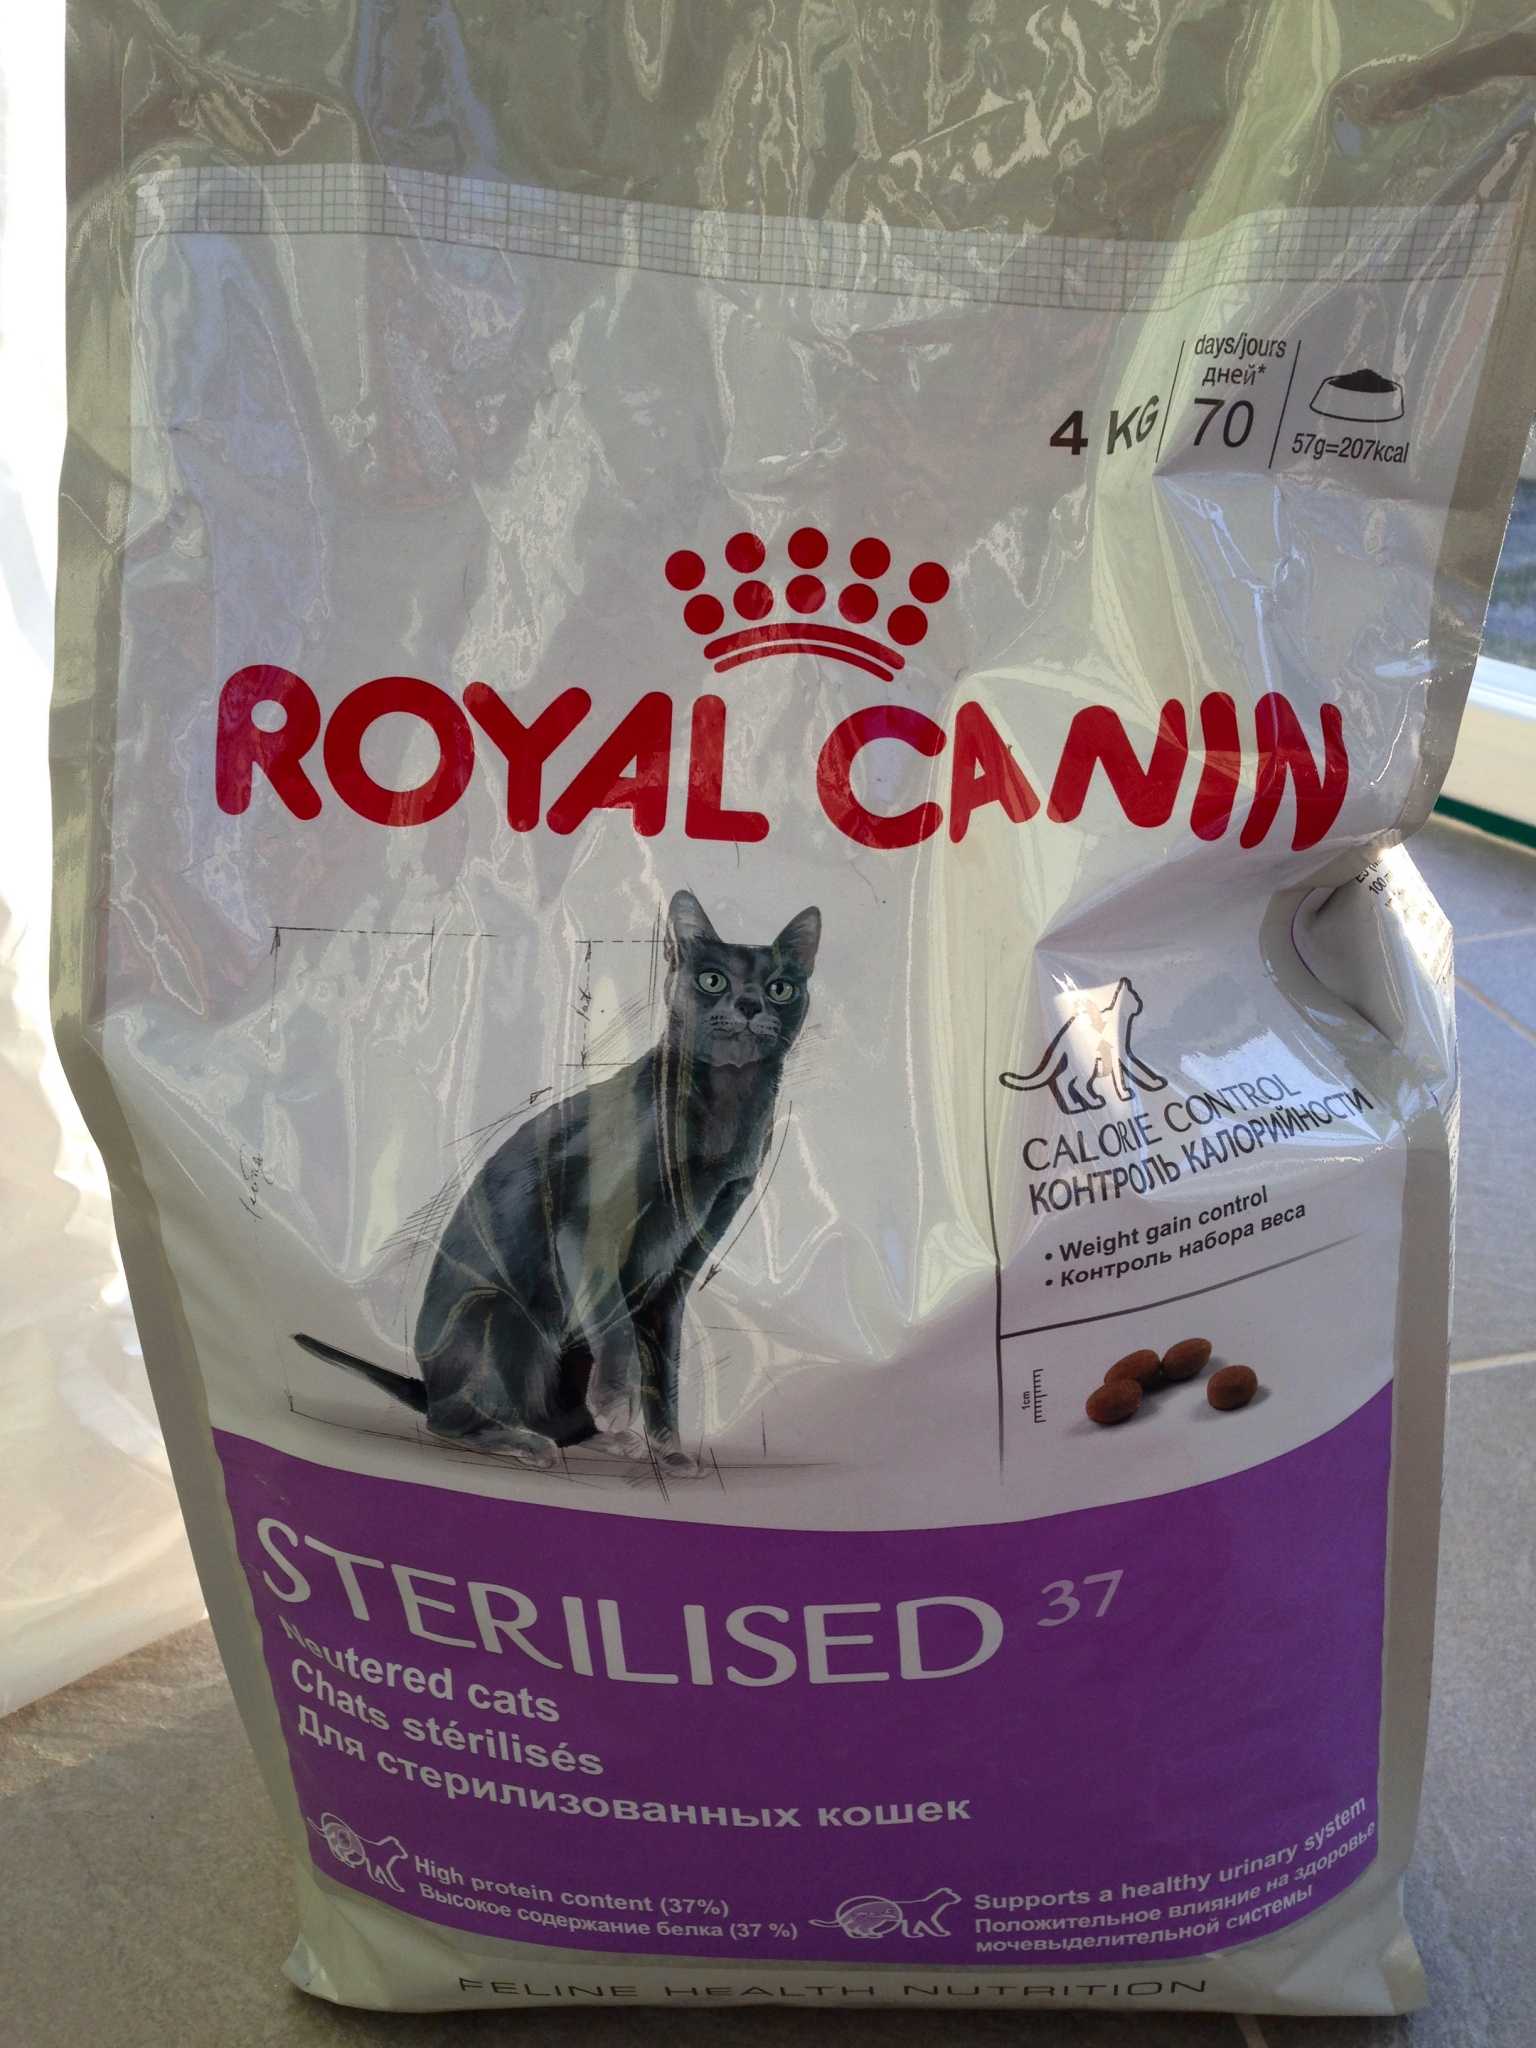 Какой сухой корм самый лучший для кошек. Royal Canin Sterilised, 4кг. Роял Канин для стерильных кошек. Роял Канин для стерилизованных кошек 4 кг сухой корм. Royal Canin Sterilised 37 4 кг.